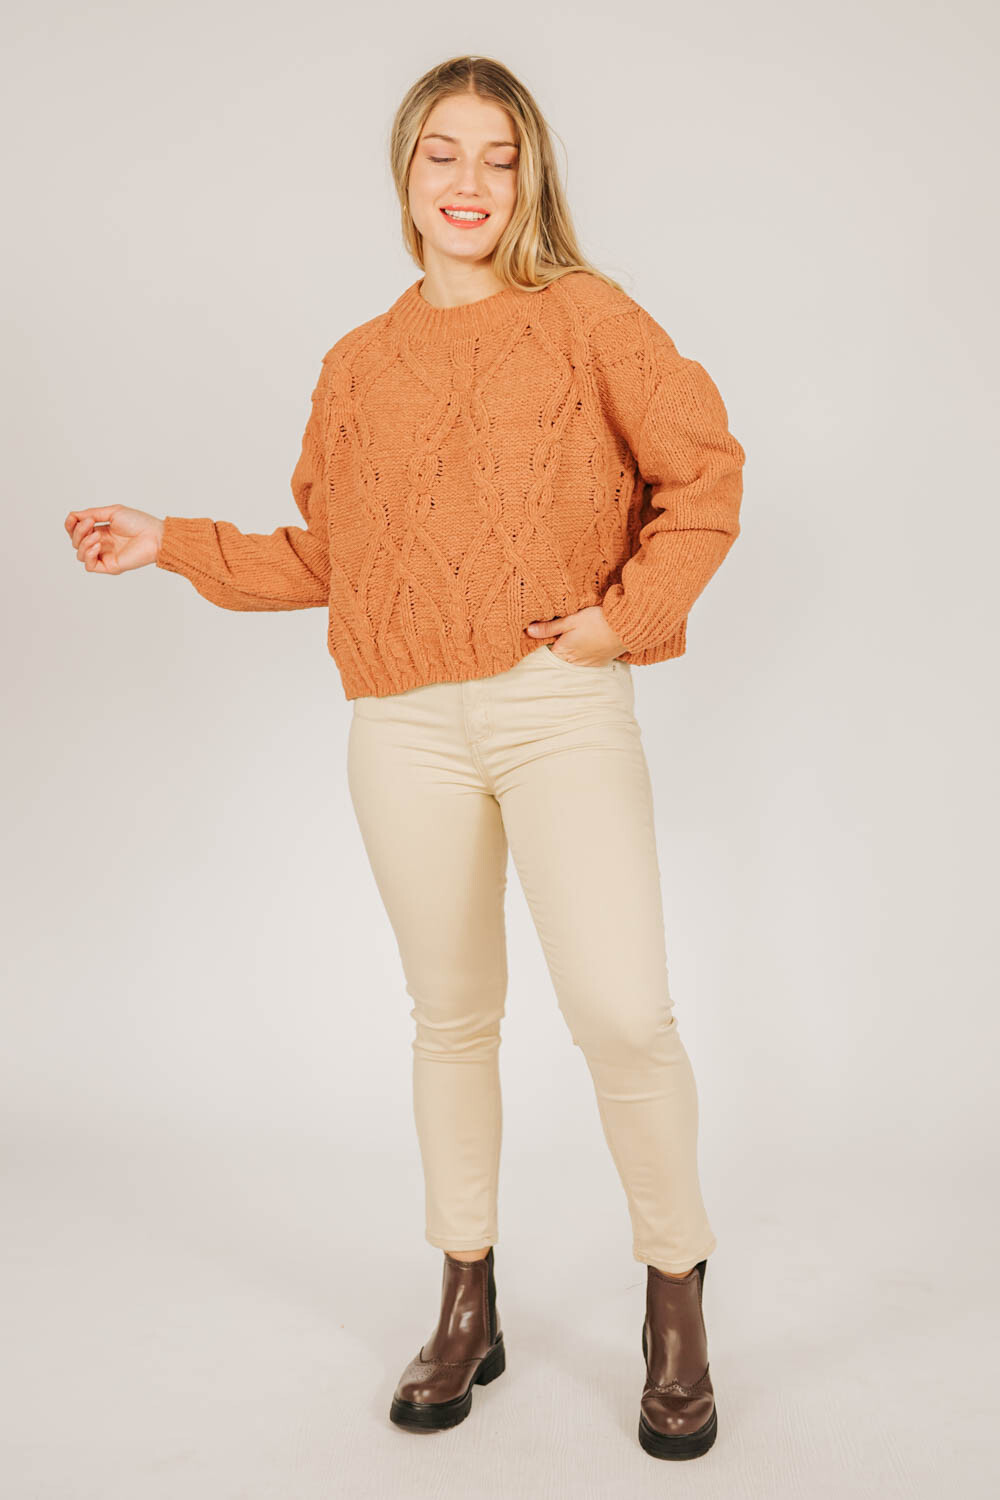 Sweater Nambucca Cobre